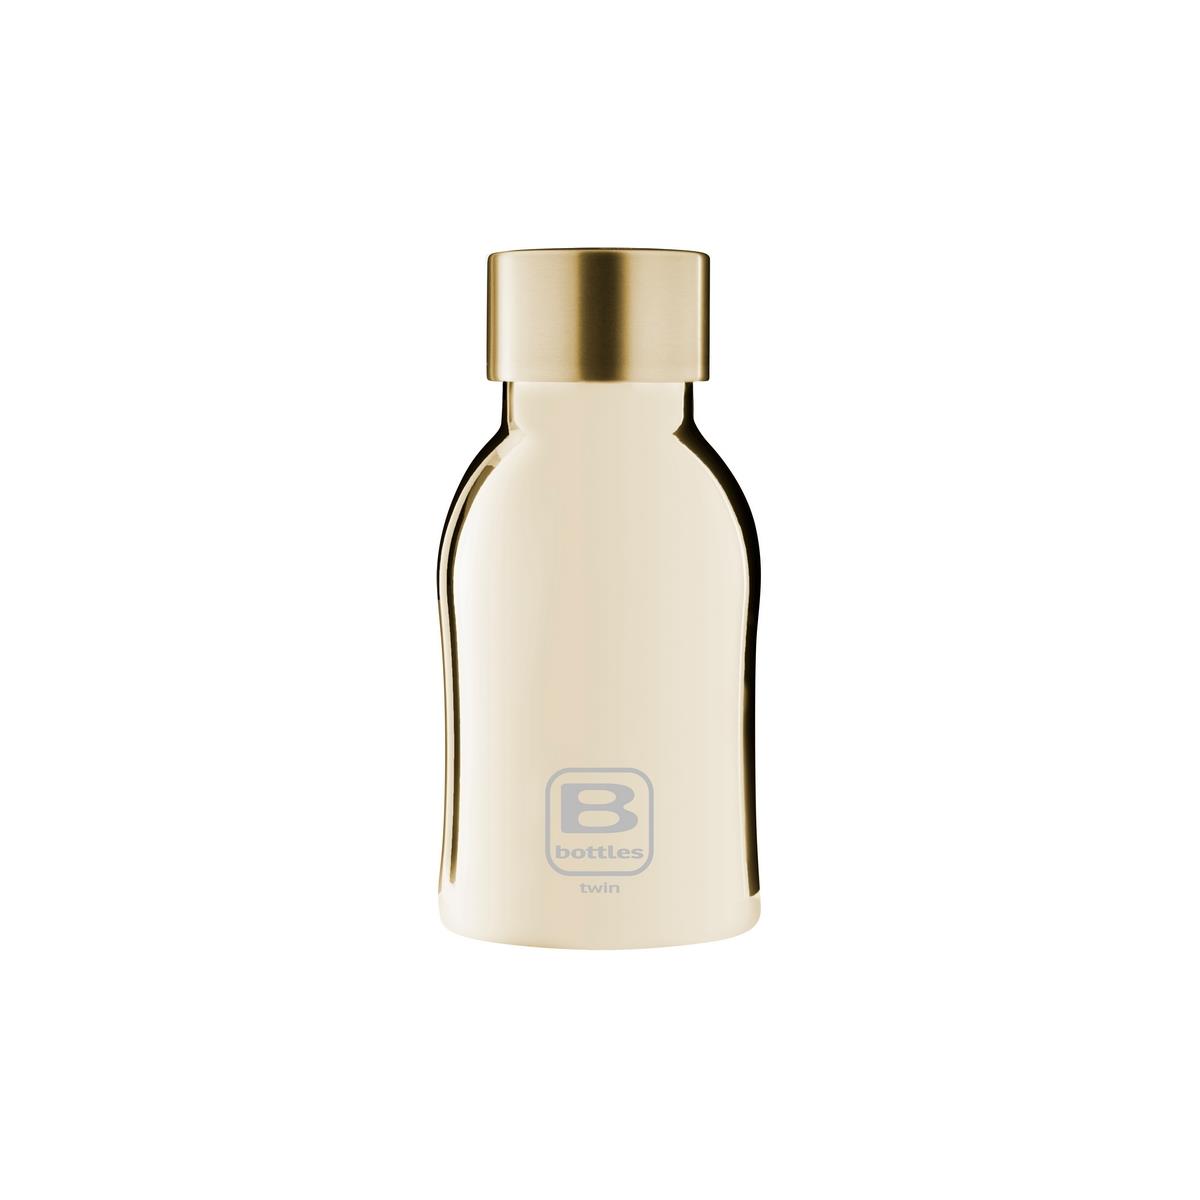 photo B Bottles Twin - Yellow Gold Lux ????- 250 ml - Doppelwandige Thermoflasche aus Edelstahl 18/10